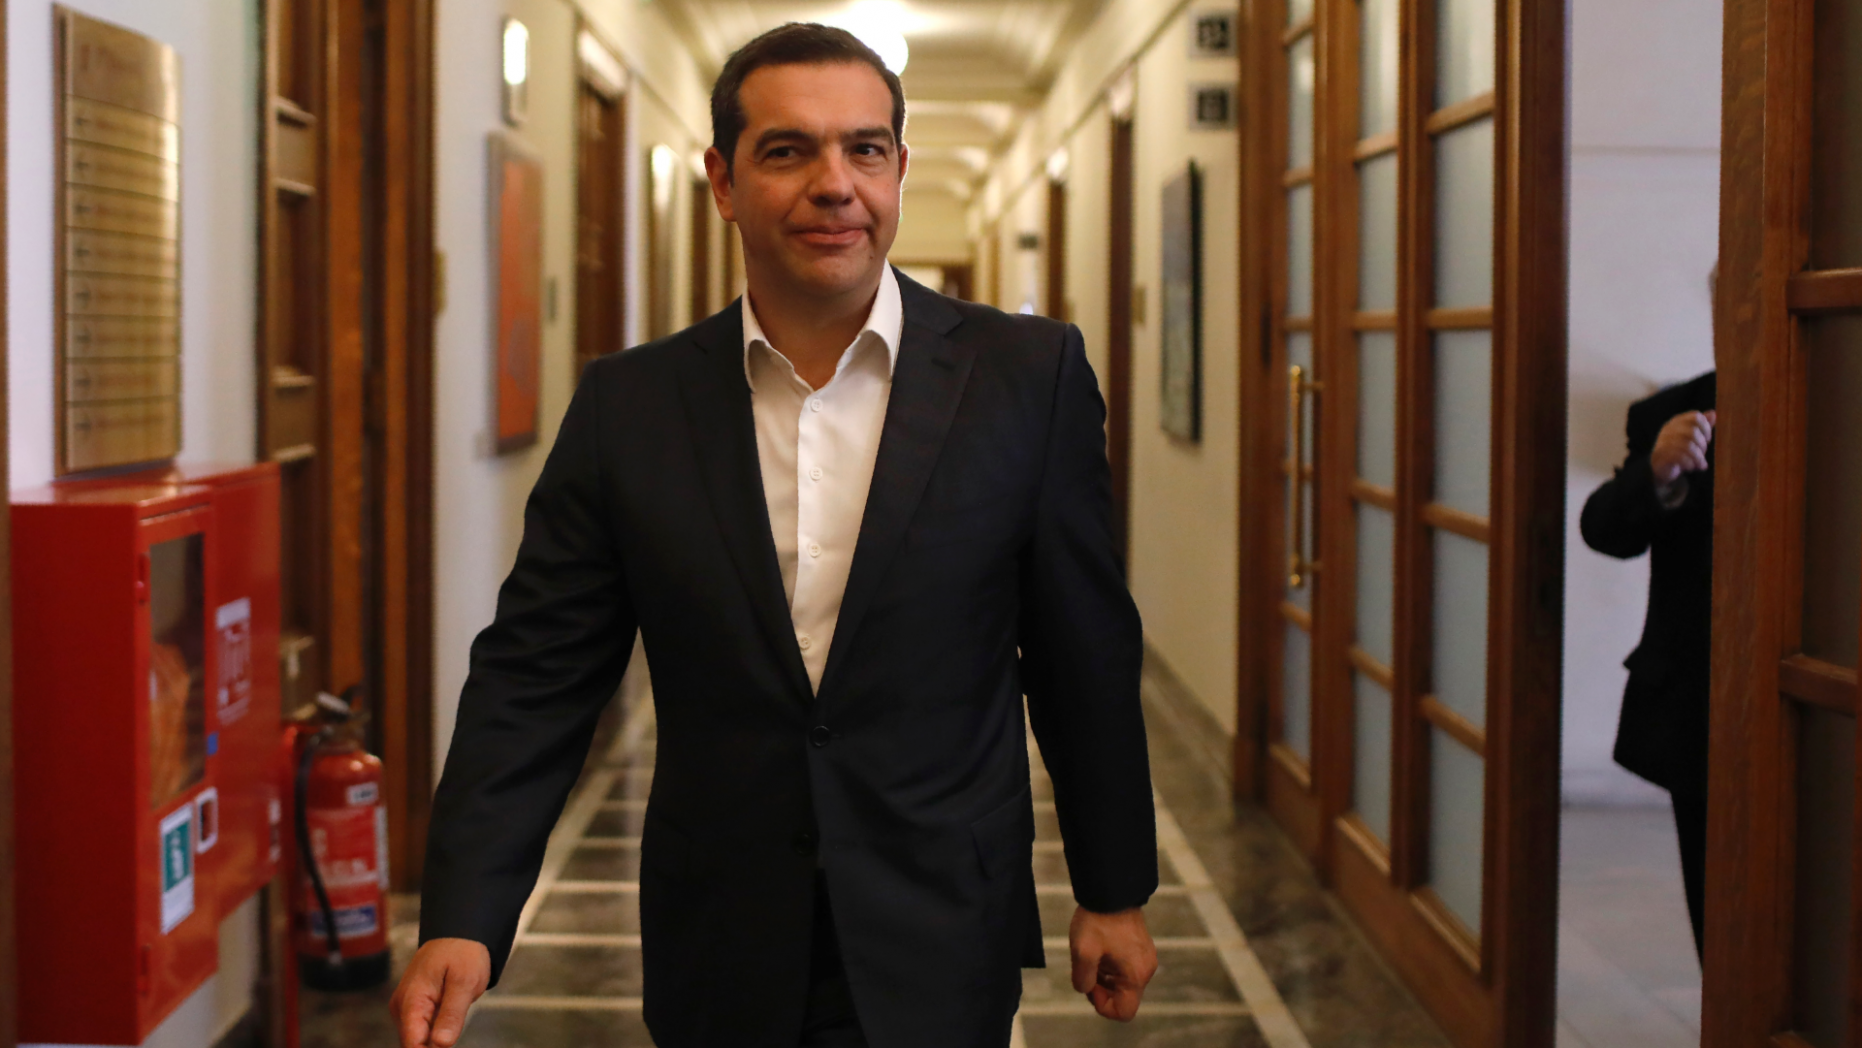 Associated Press: EU wary on budget impact of Greece’s new benefits, tax cuts